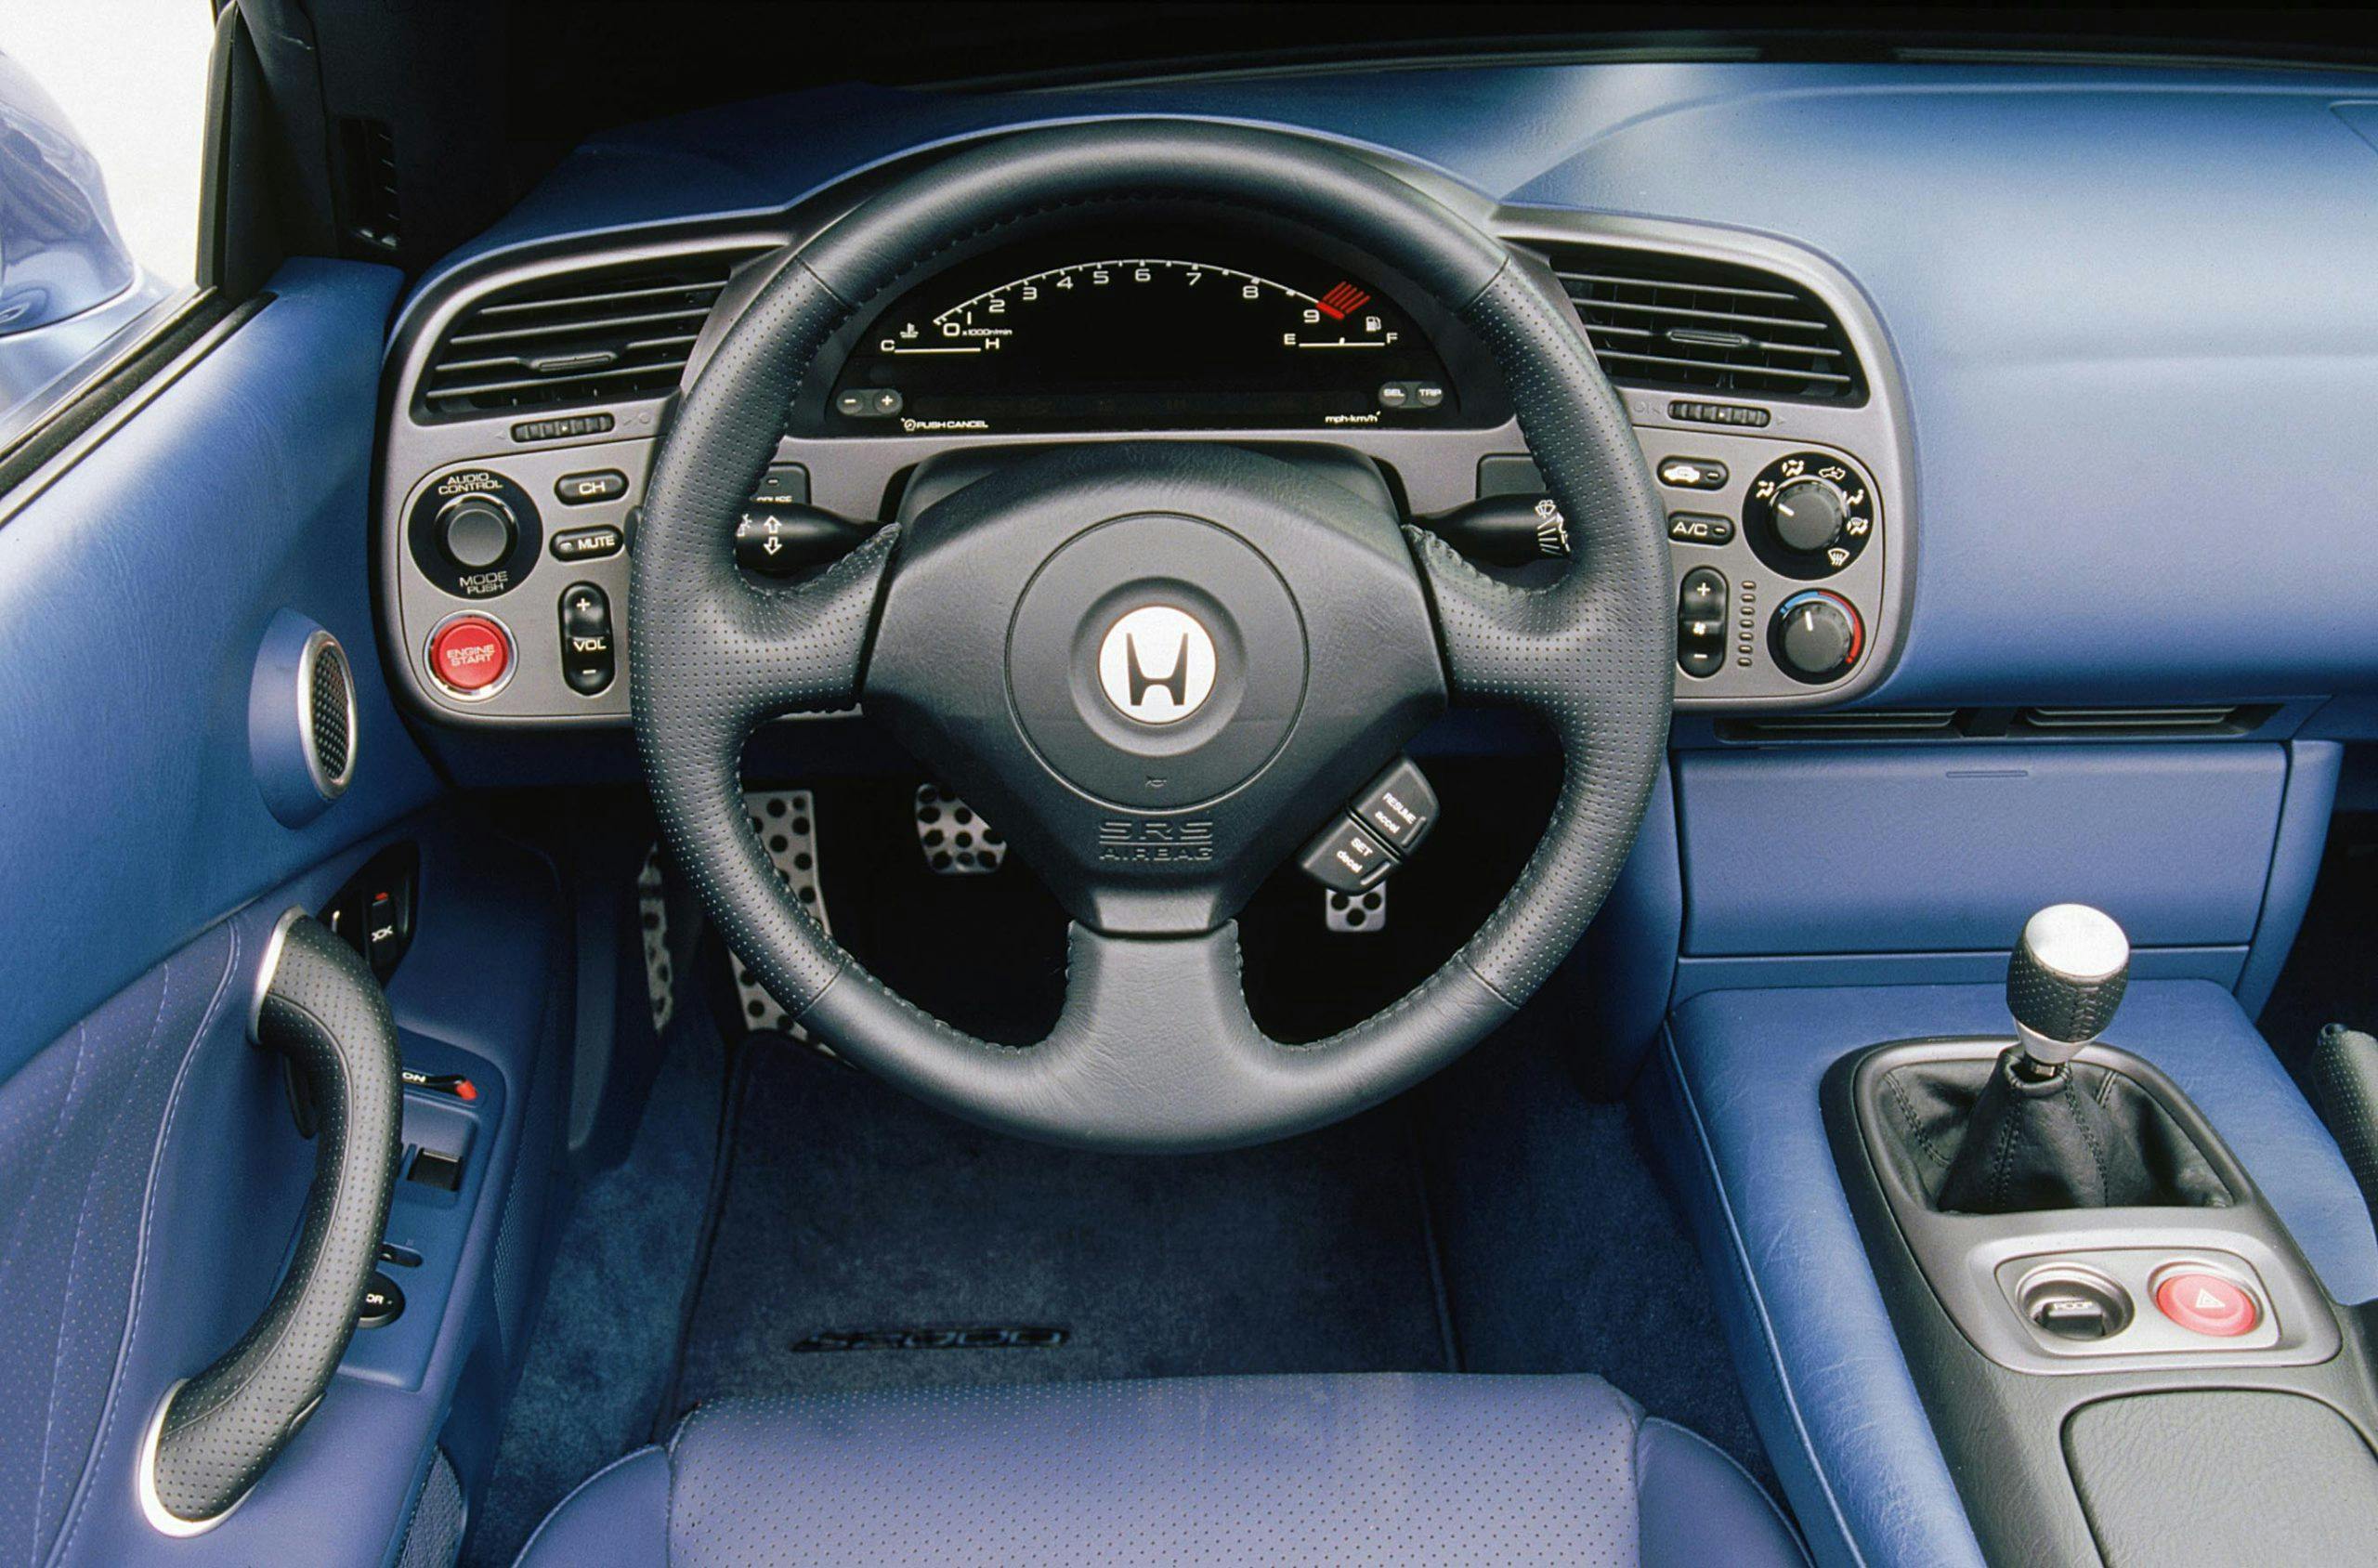 2002 Honda S2000 interior leather steering wheel